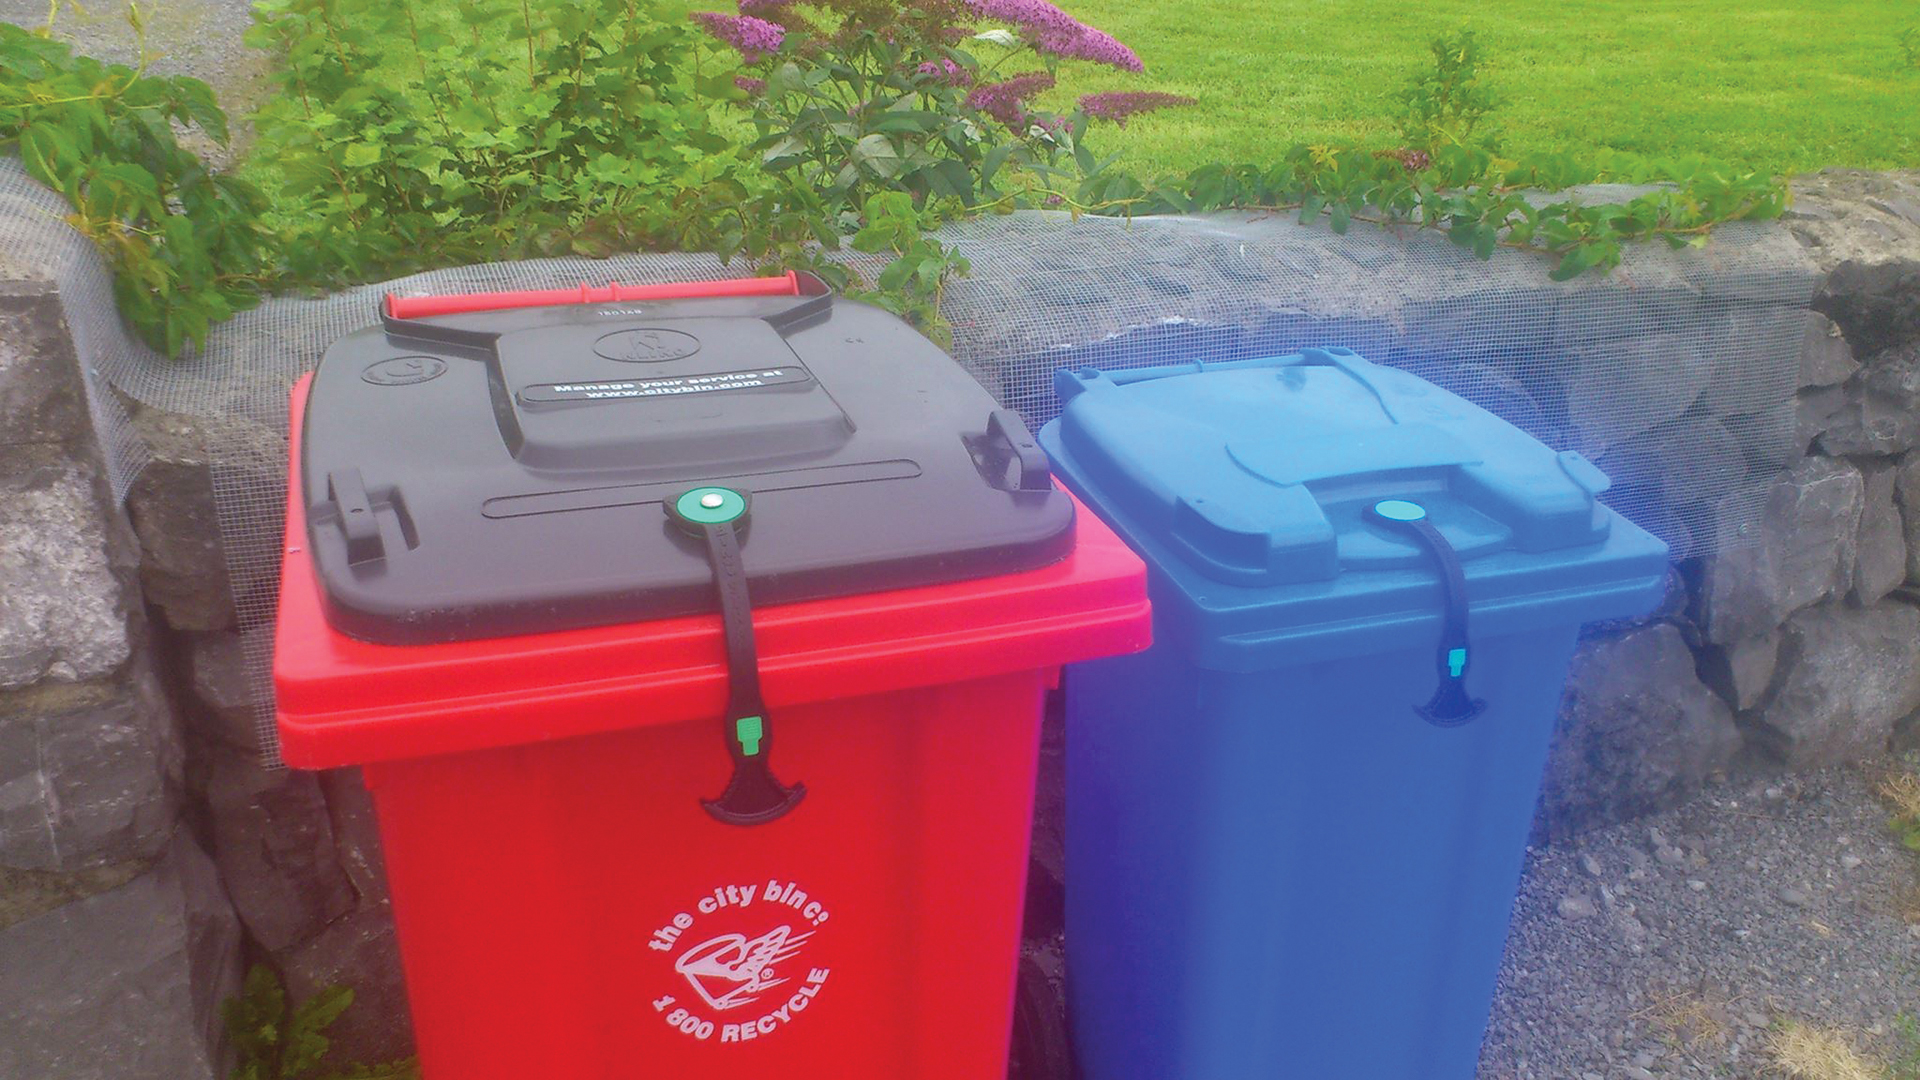 1 Guaranteed4Less 50L Waste Recycling Rubbish Disposal Dustbin Bin Home Office Work Garden Plastic